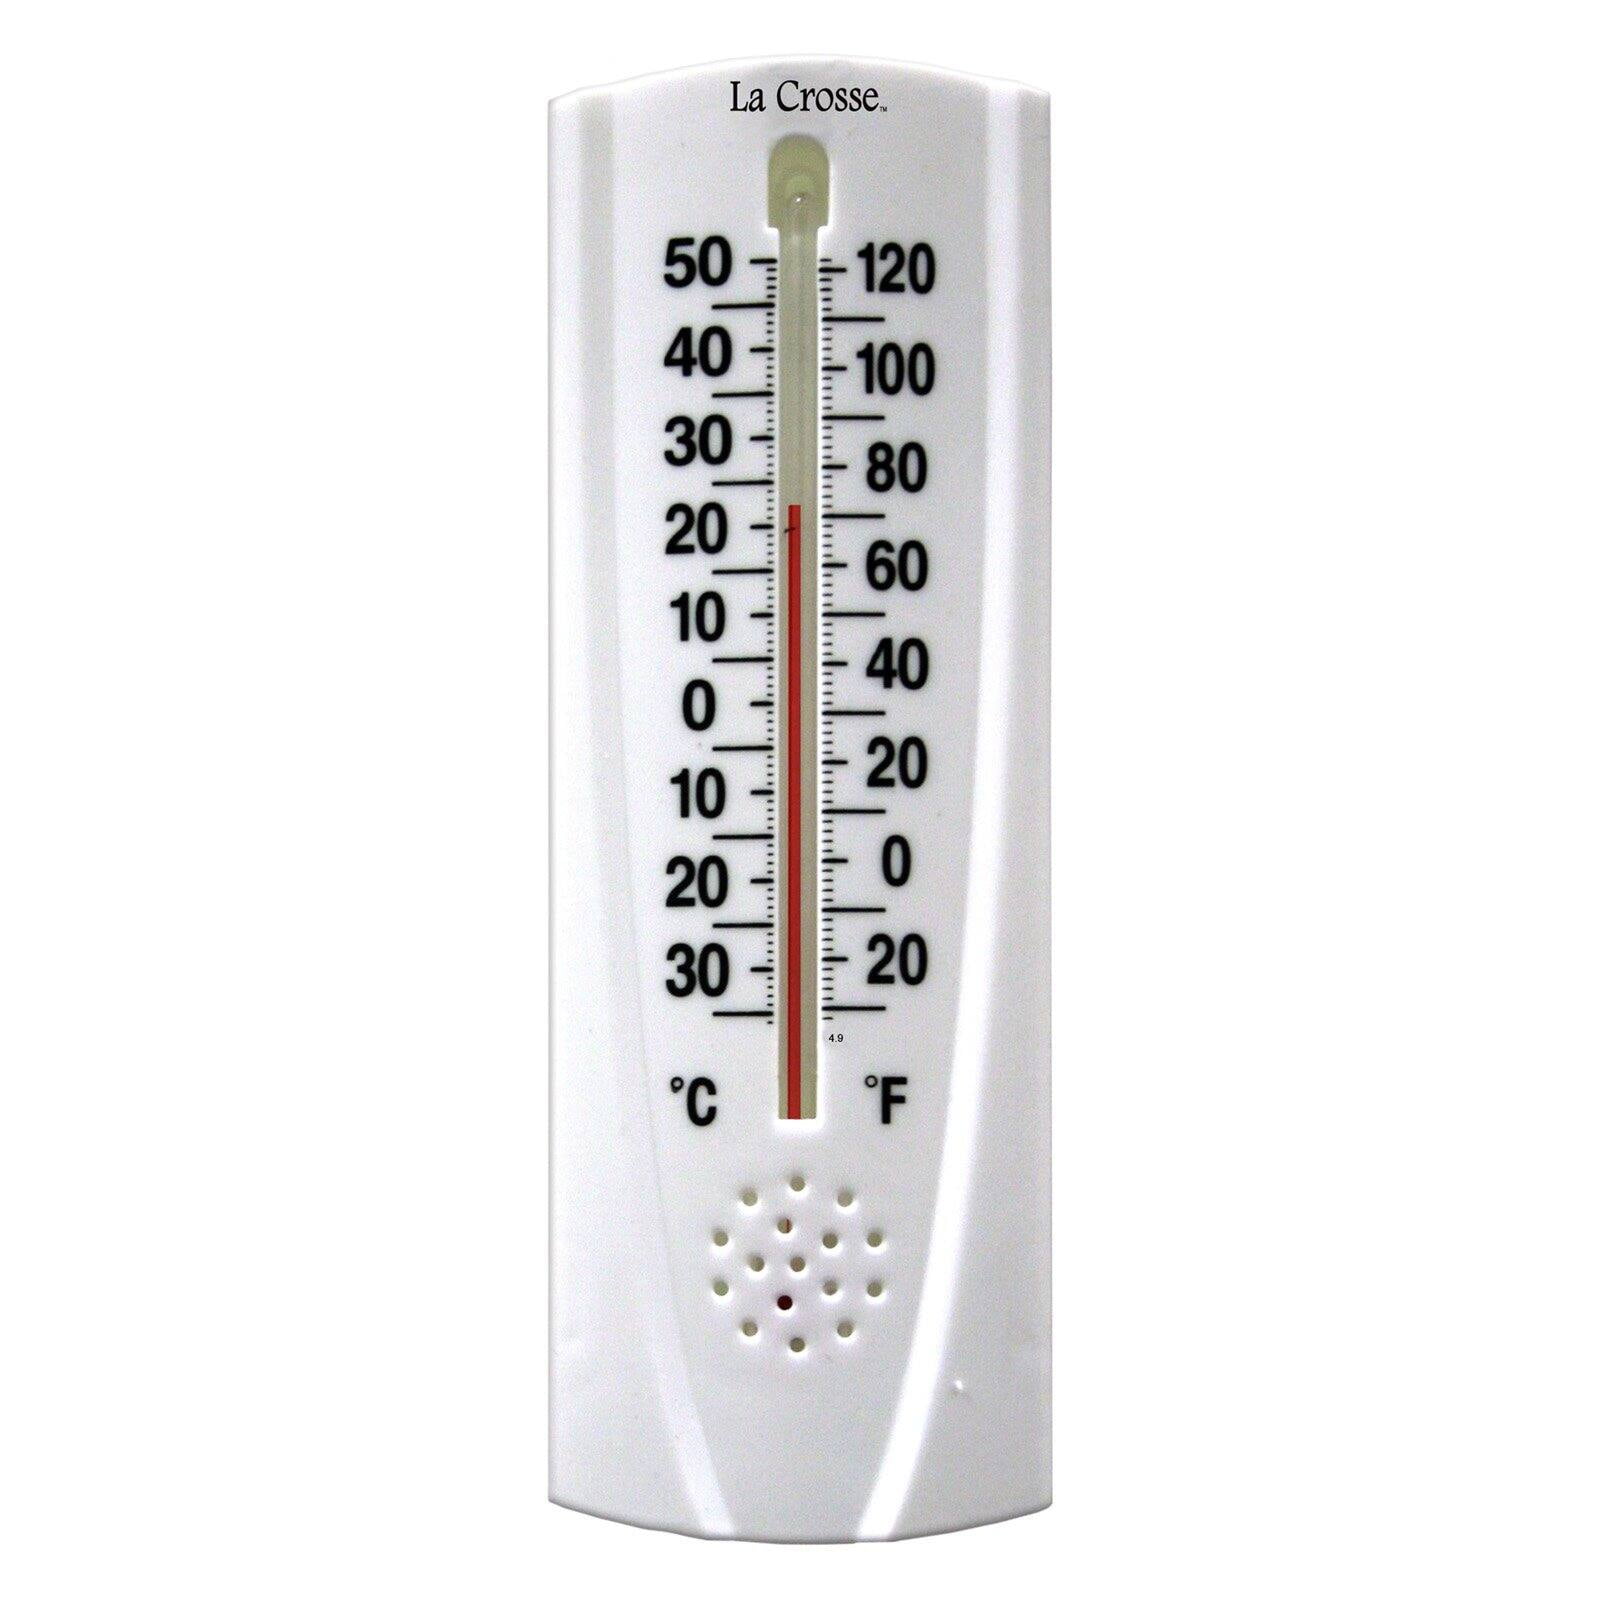 La Crosse Indoor/outdoor Thermometer & Hygrometer With Key Hider T83745 for sale online 